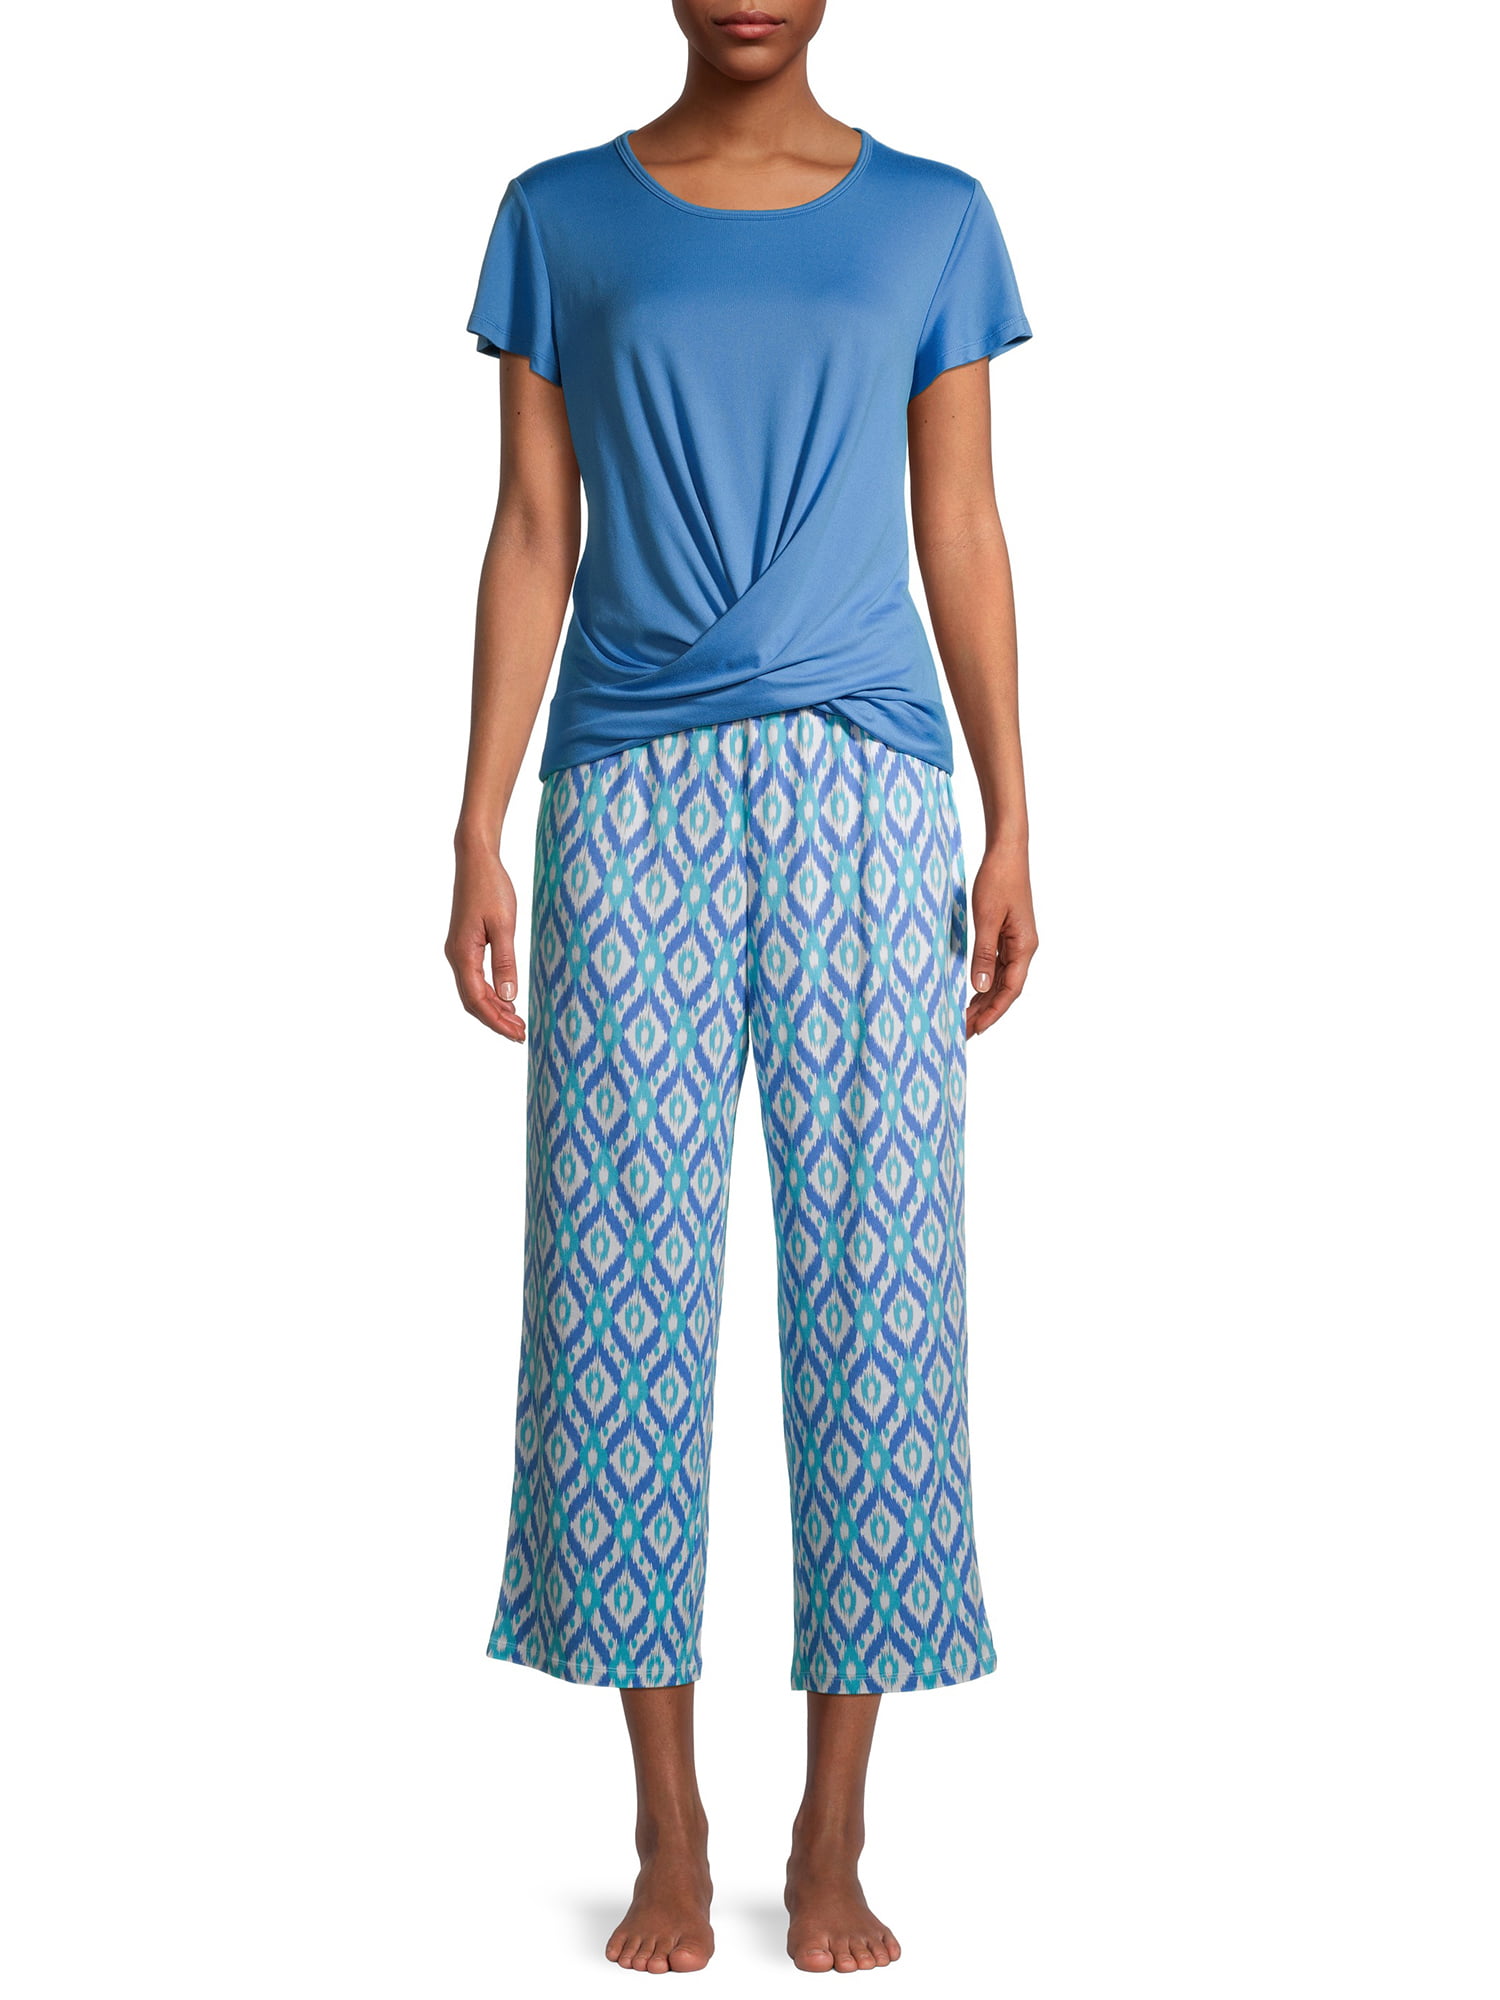 Muk Luks Women's Cropped Pants Pajama Set, 2-Piece - Walmart.com